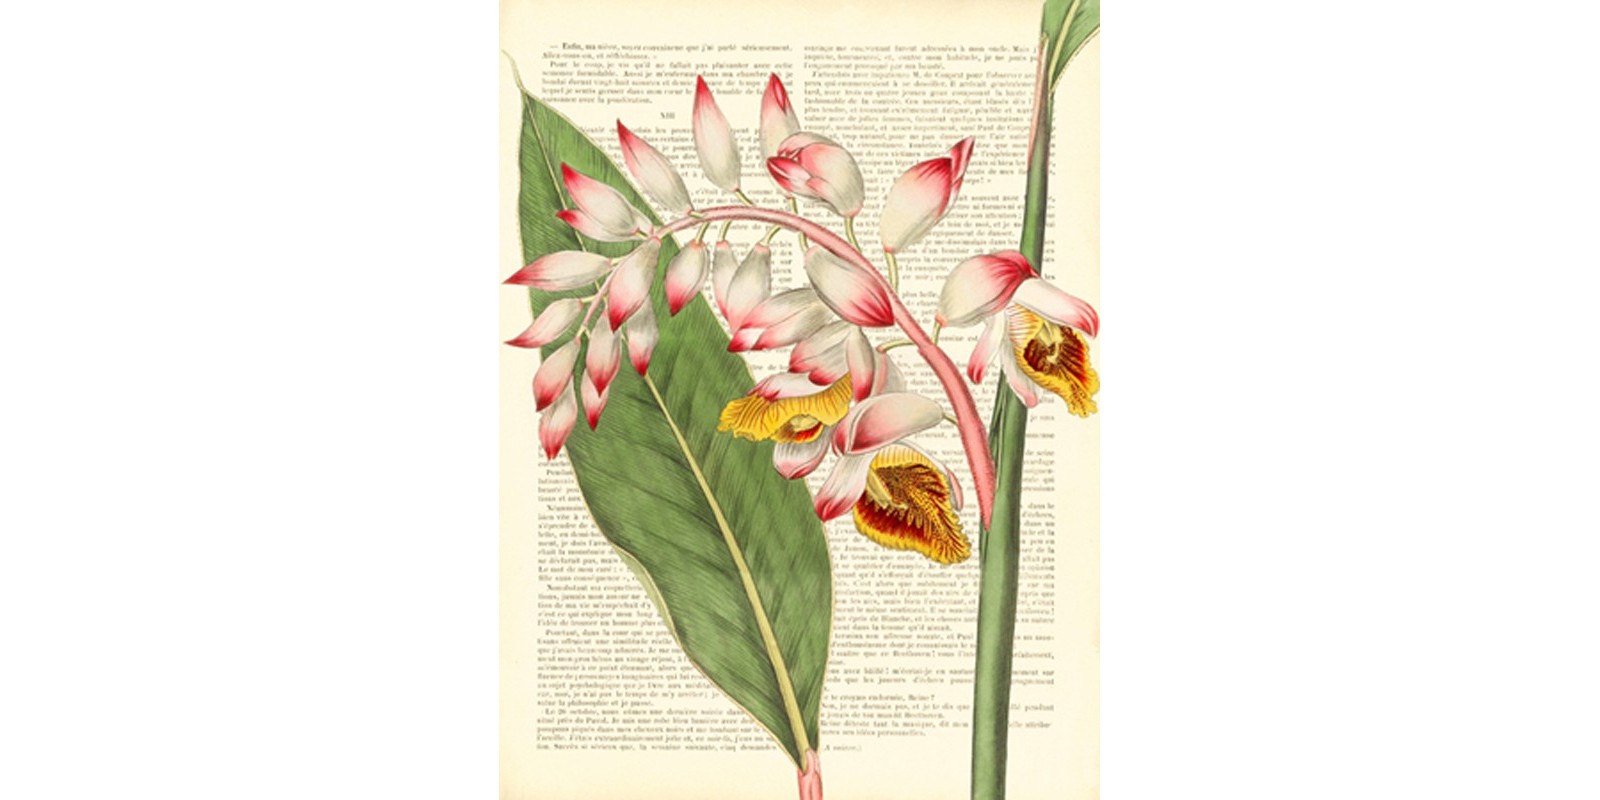 Remy Dellal - Vintage Botany II